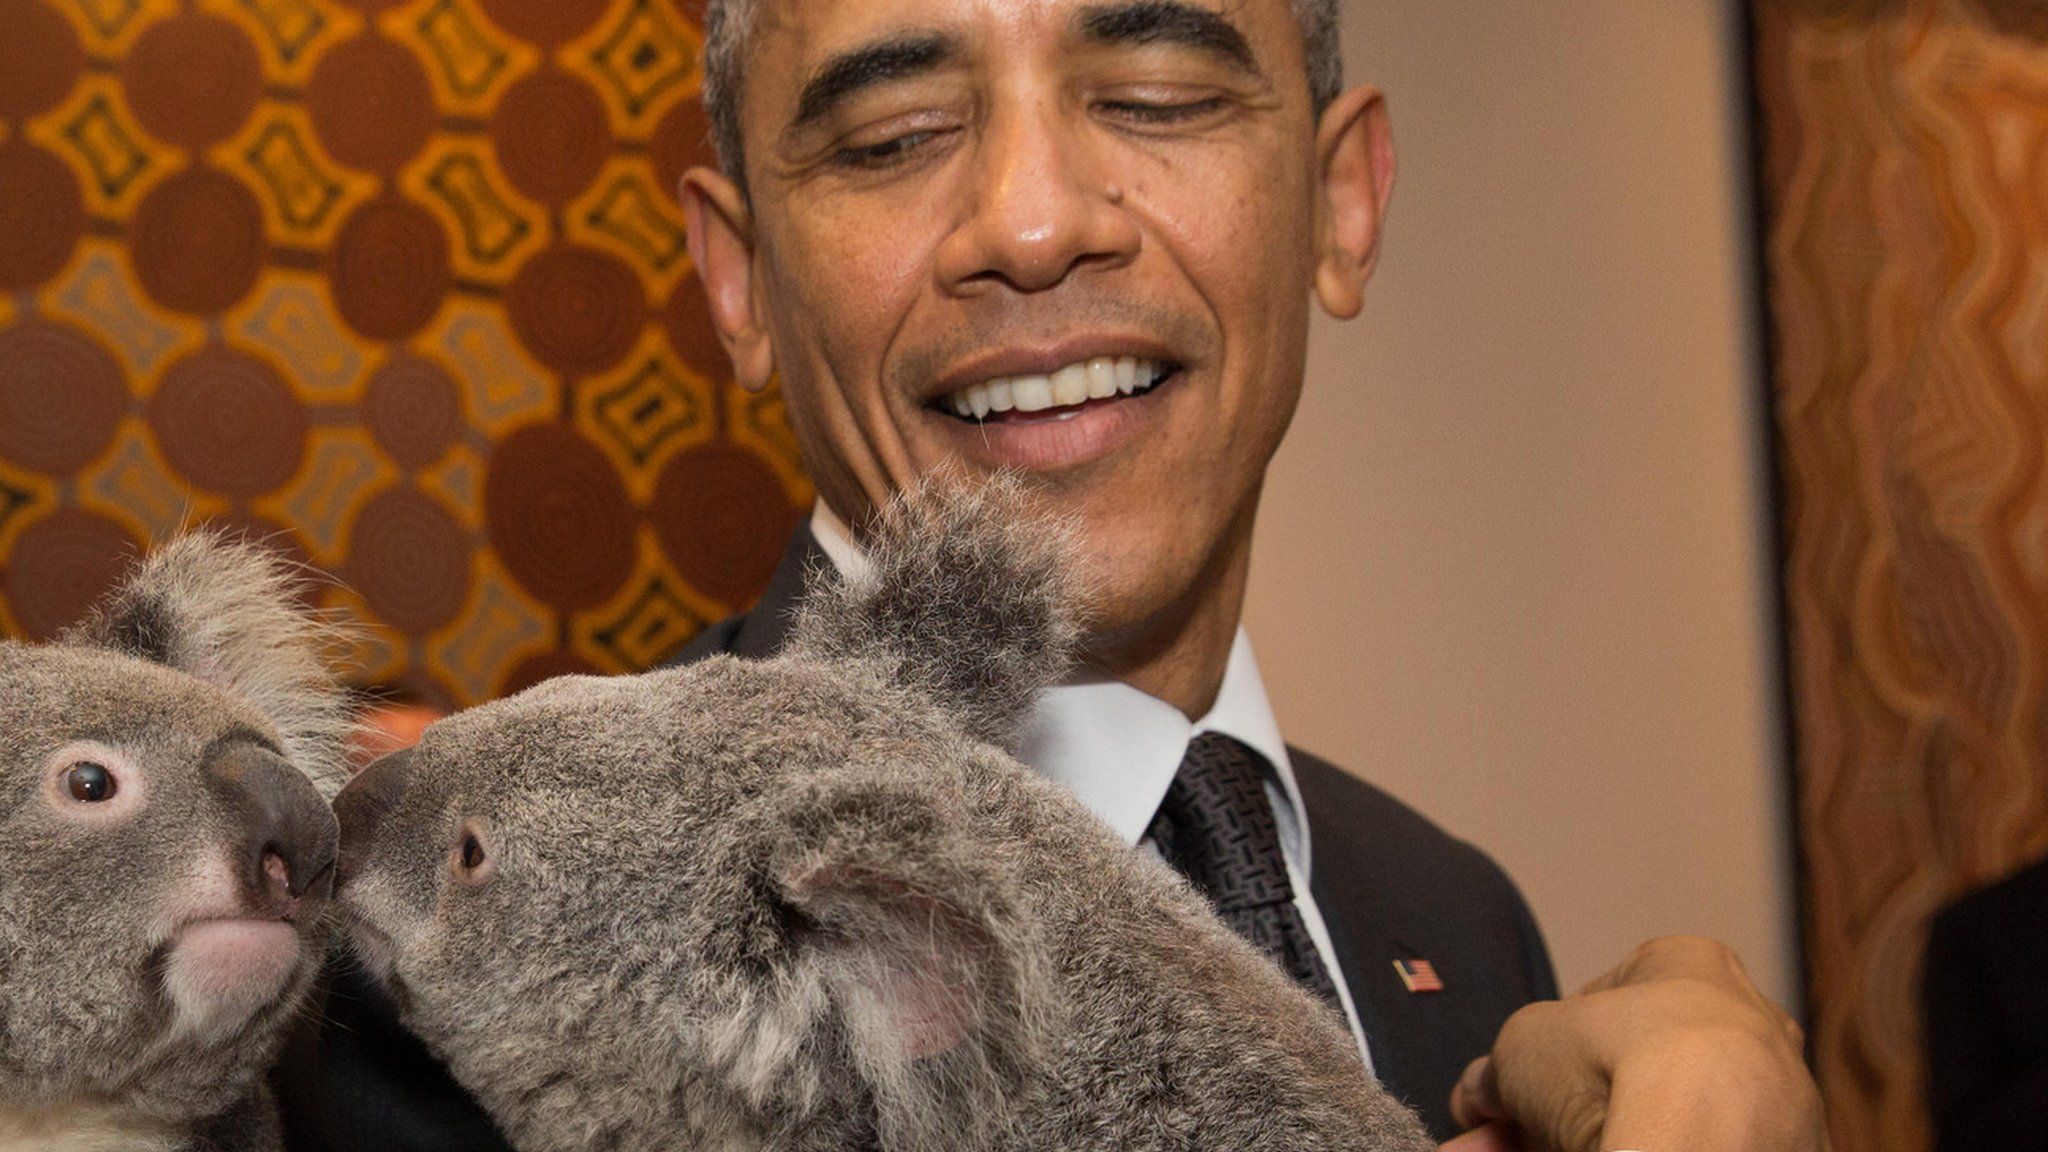 President Obama holding a koala